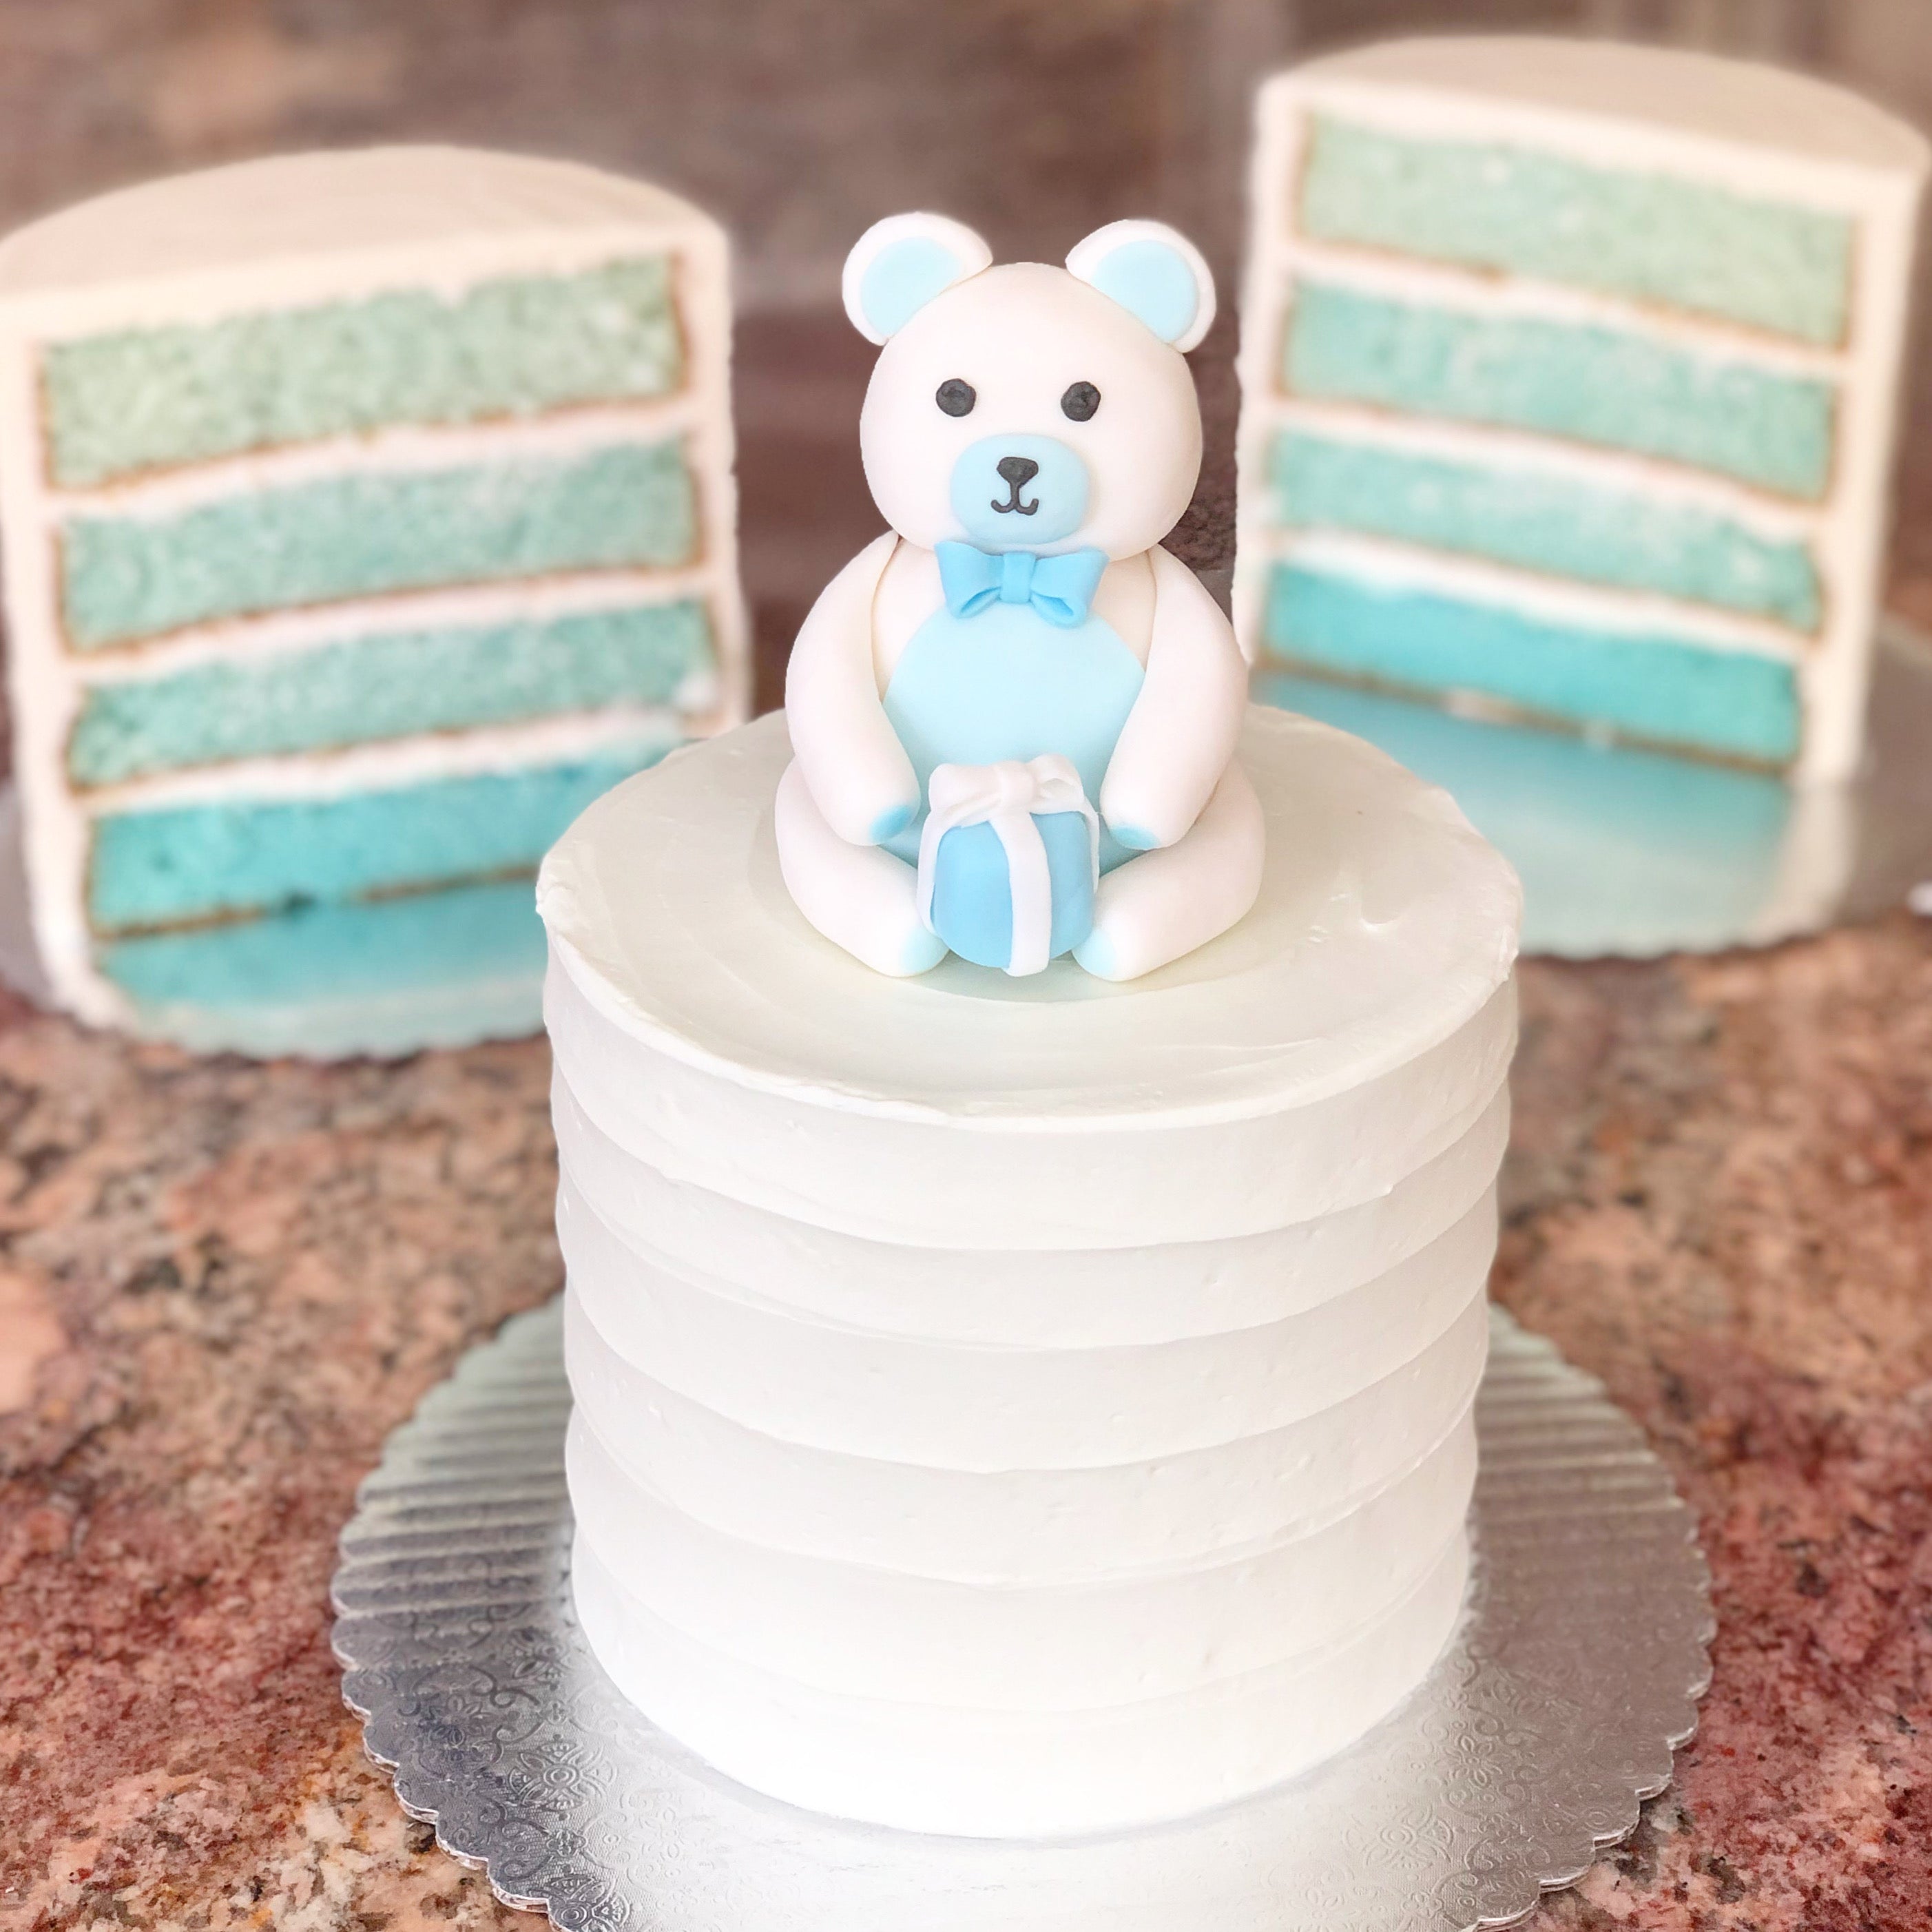 Teddy bear Cake